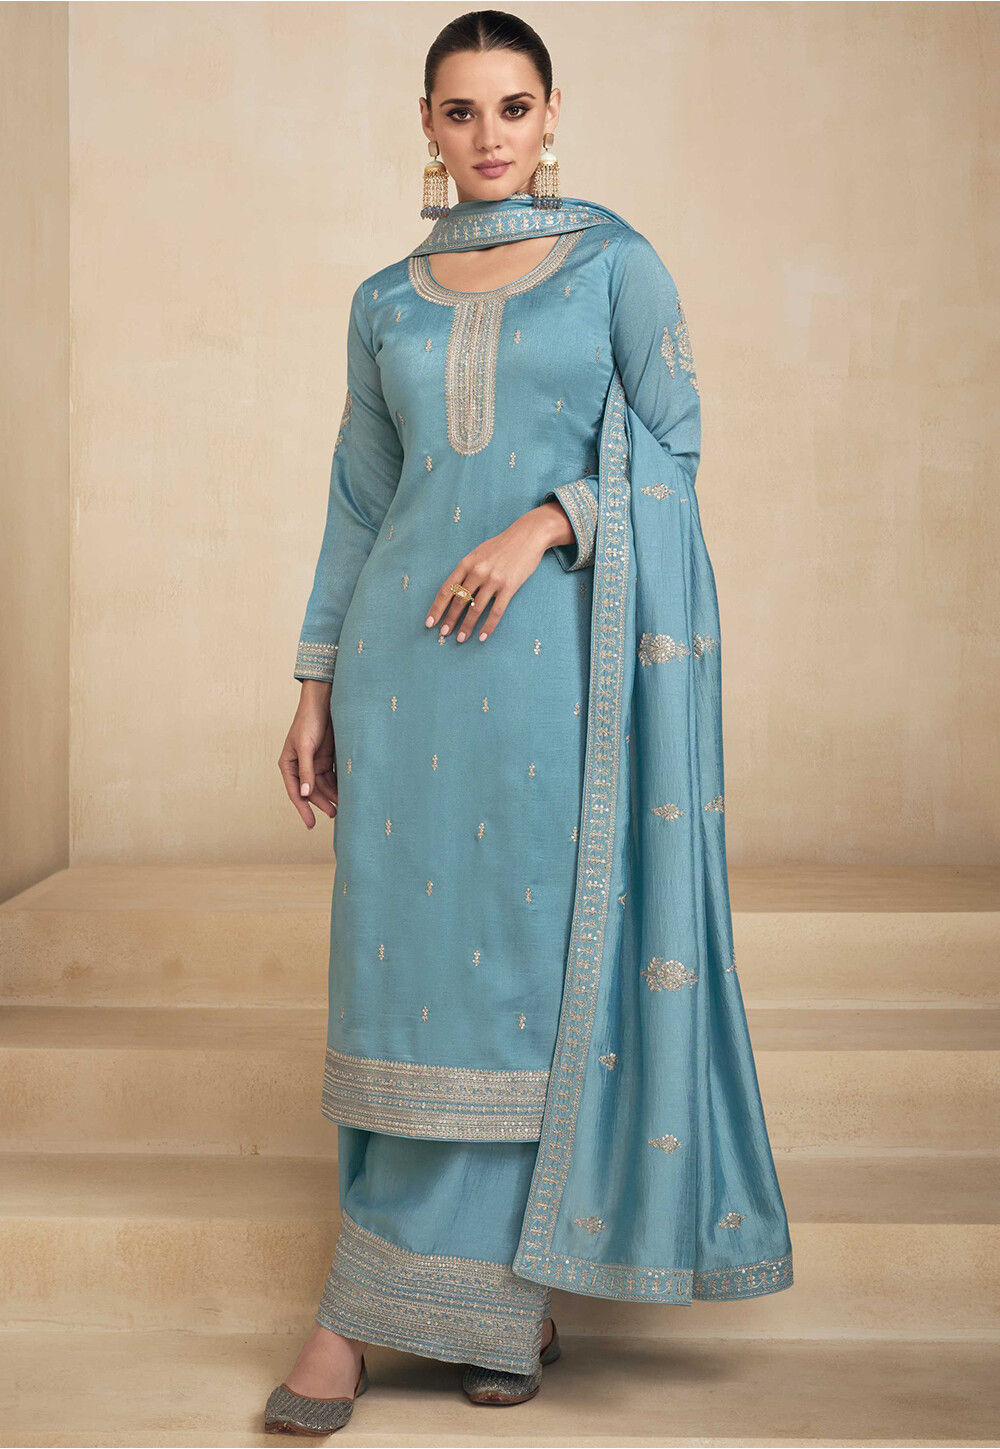 Sky Blue Sharara Suit Plazzo Dress Indian Ethnic Woman Salwar Kameez Party  Wear | eBay